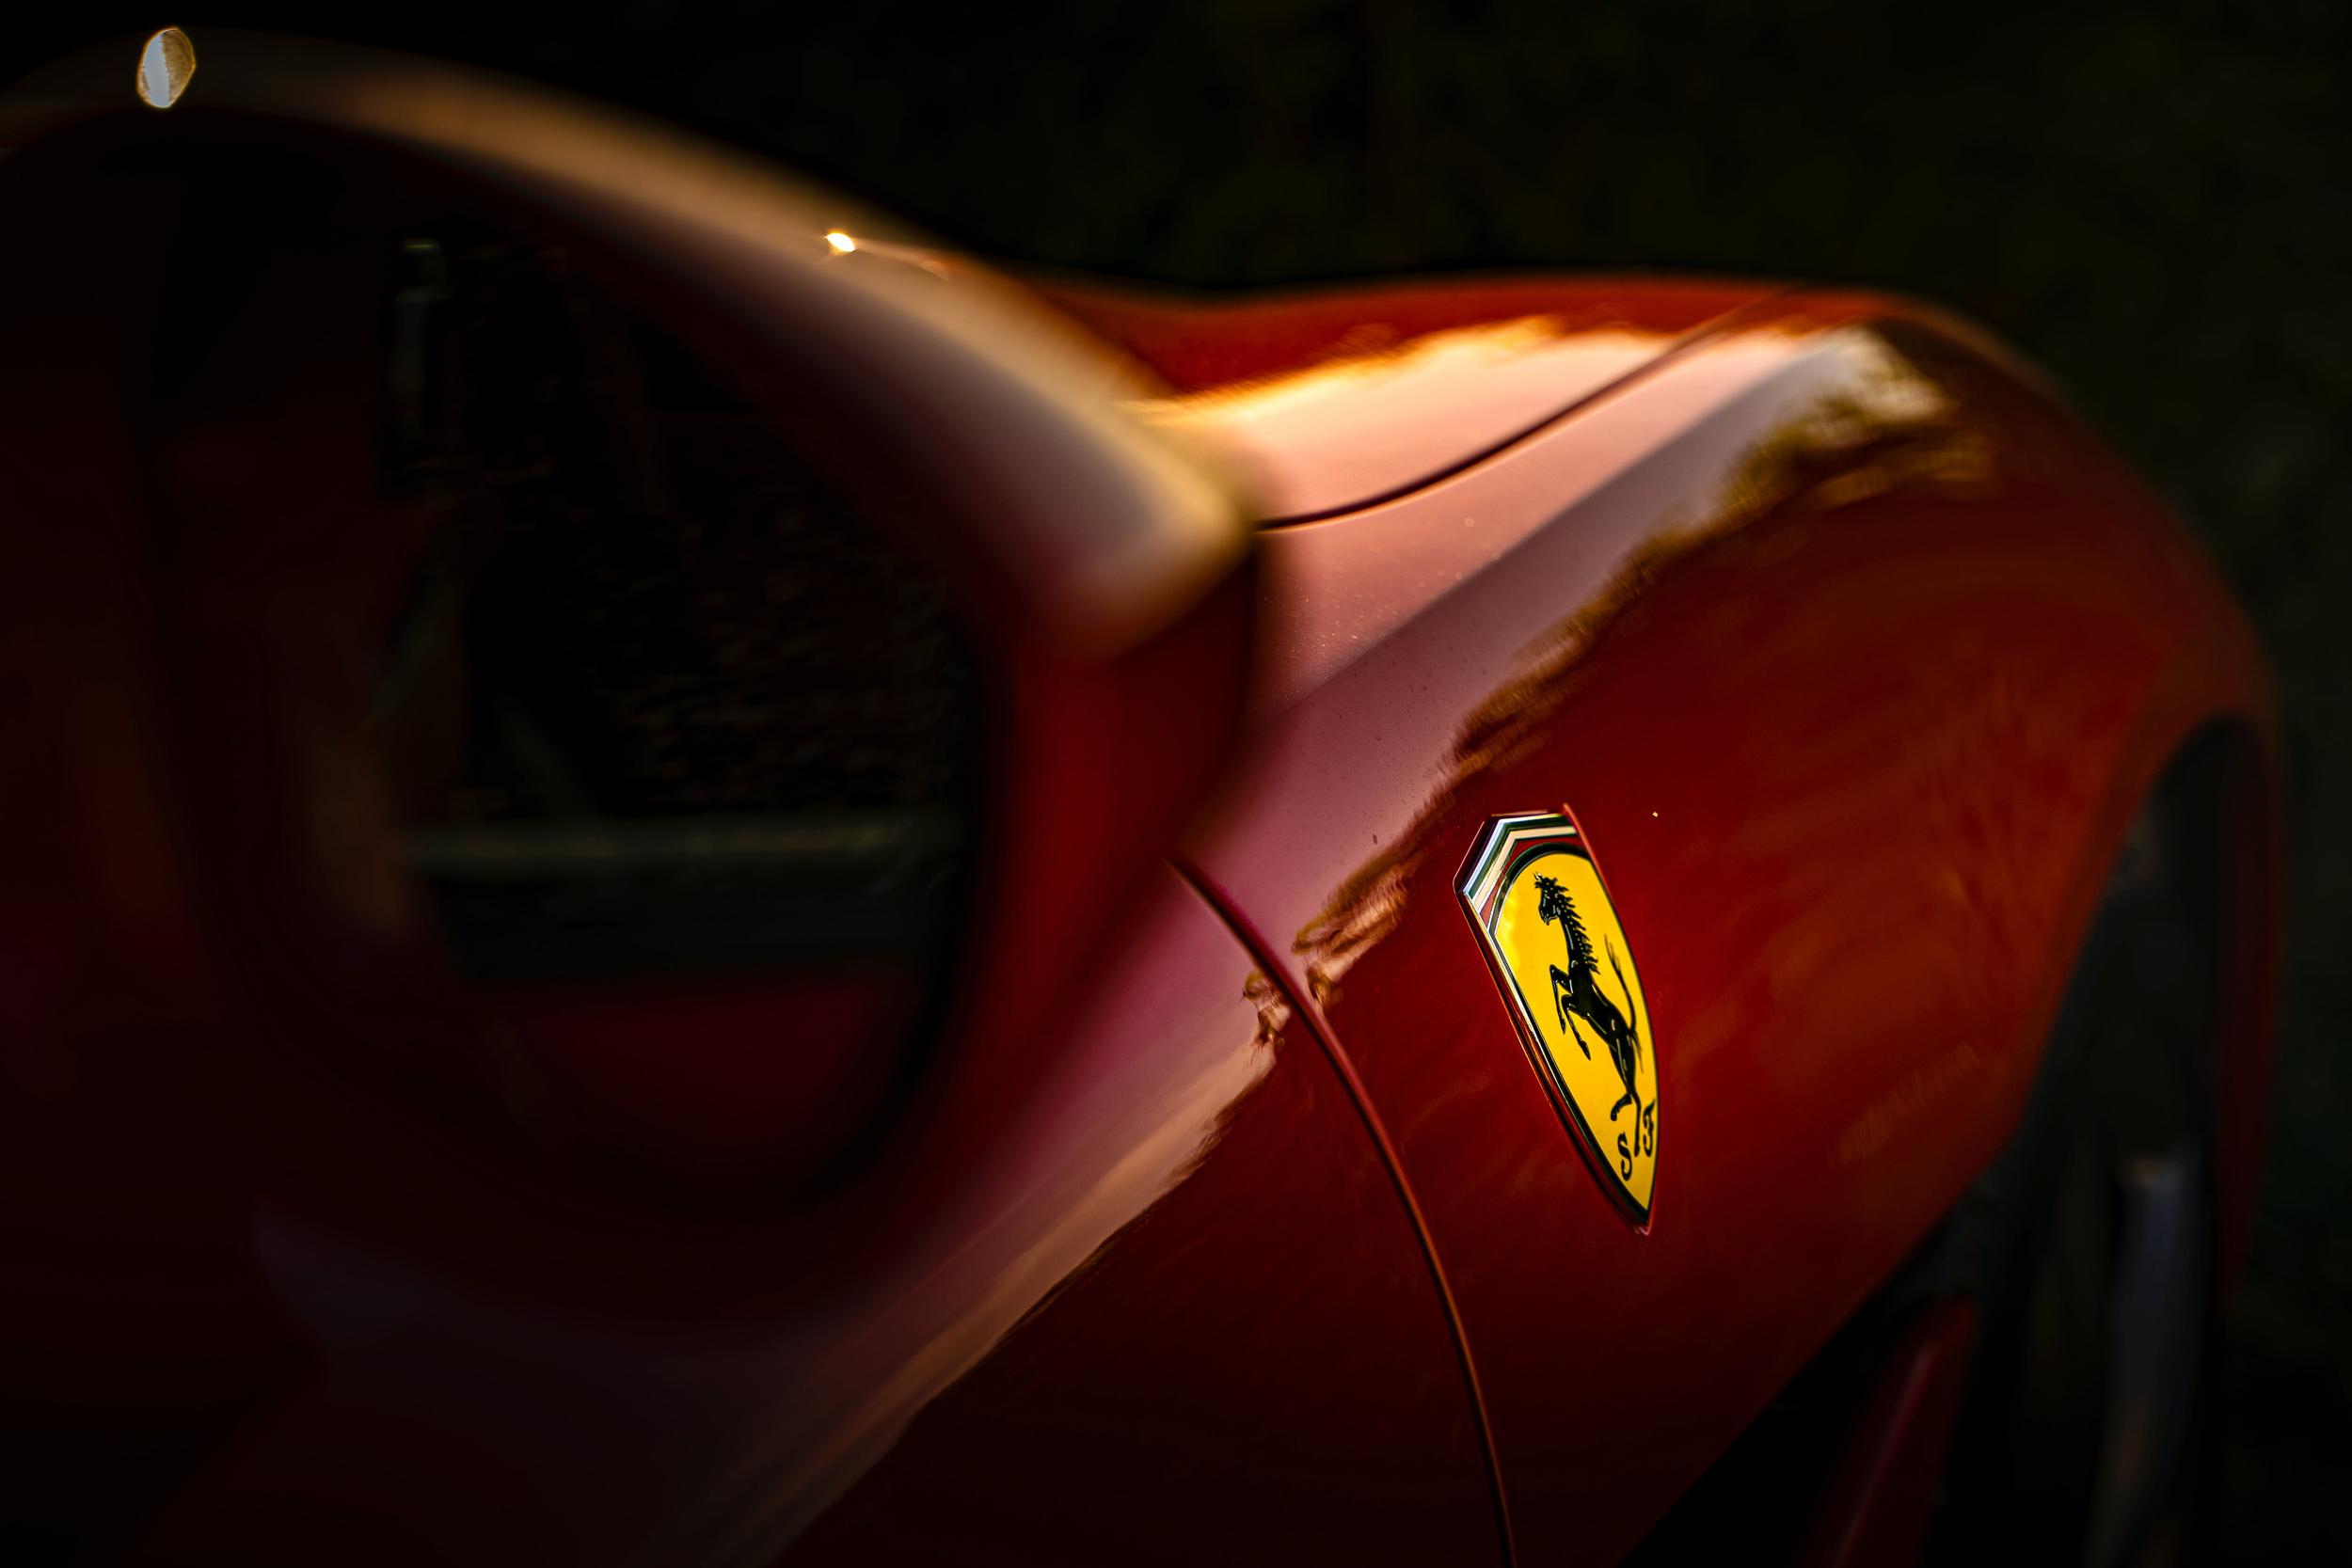 Ferrari cars that look like a chevy corvette